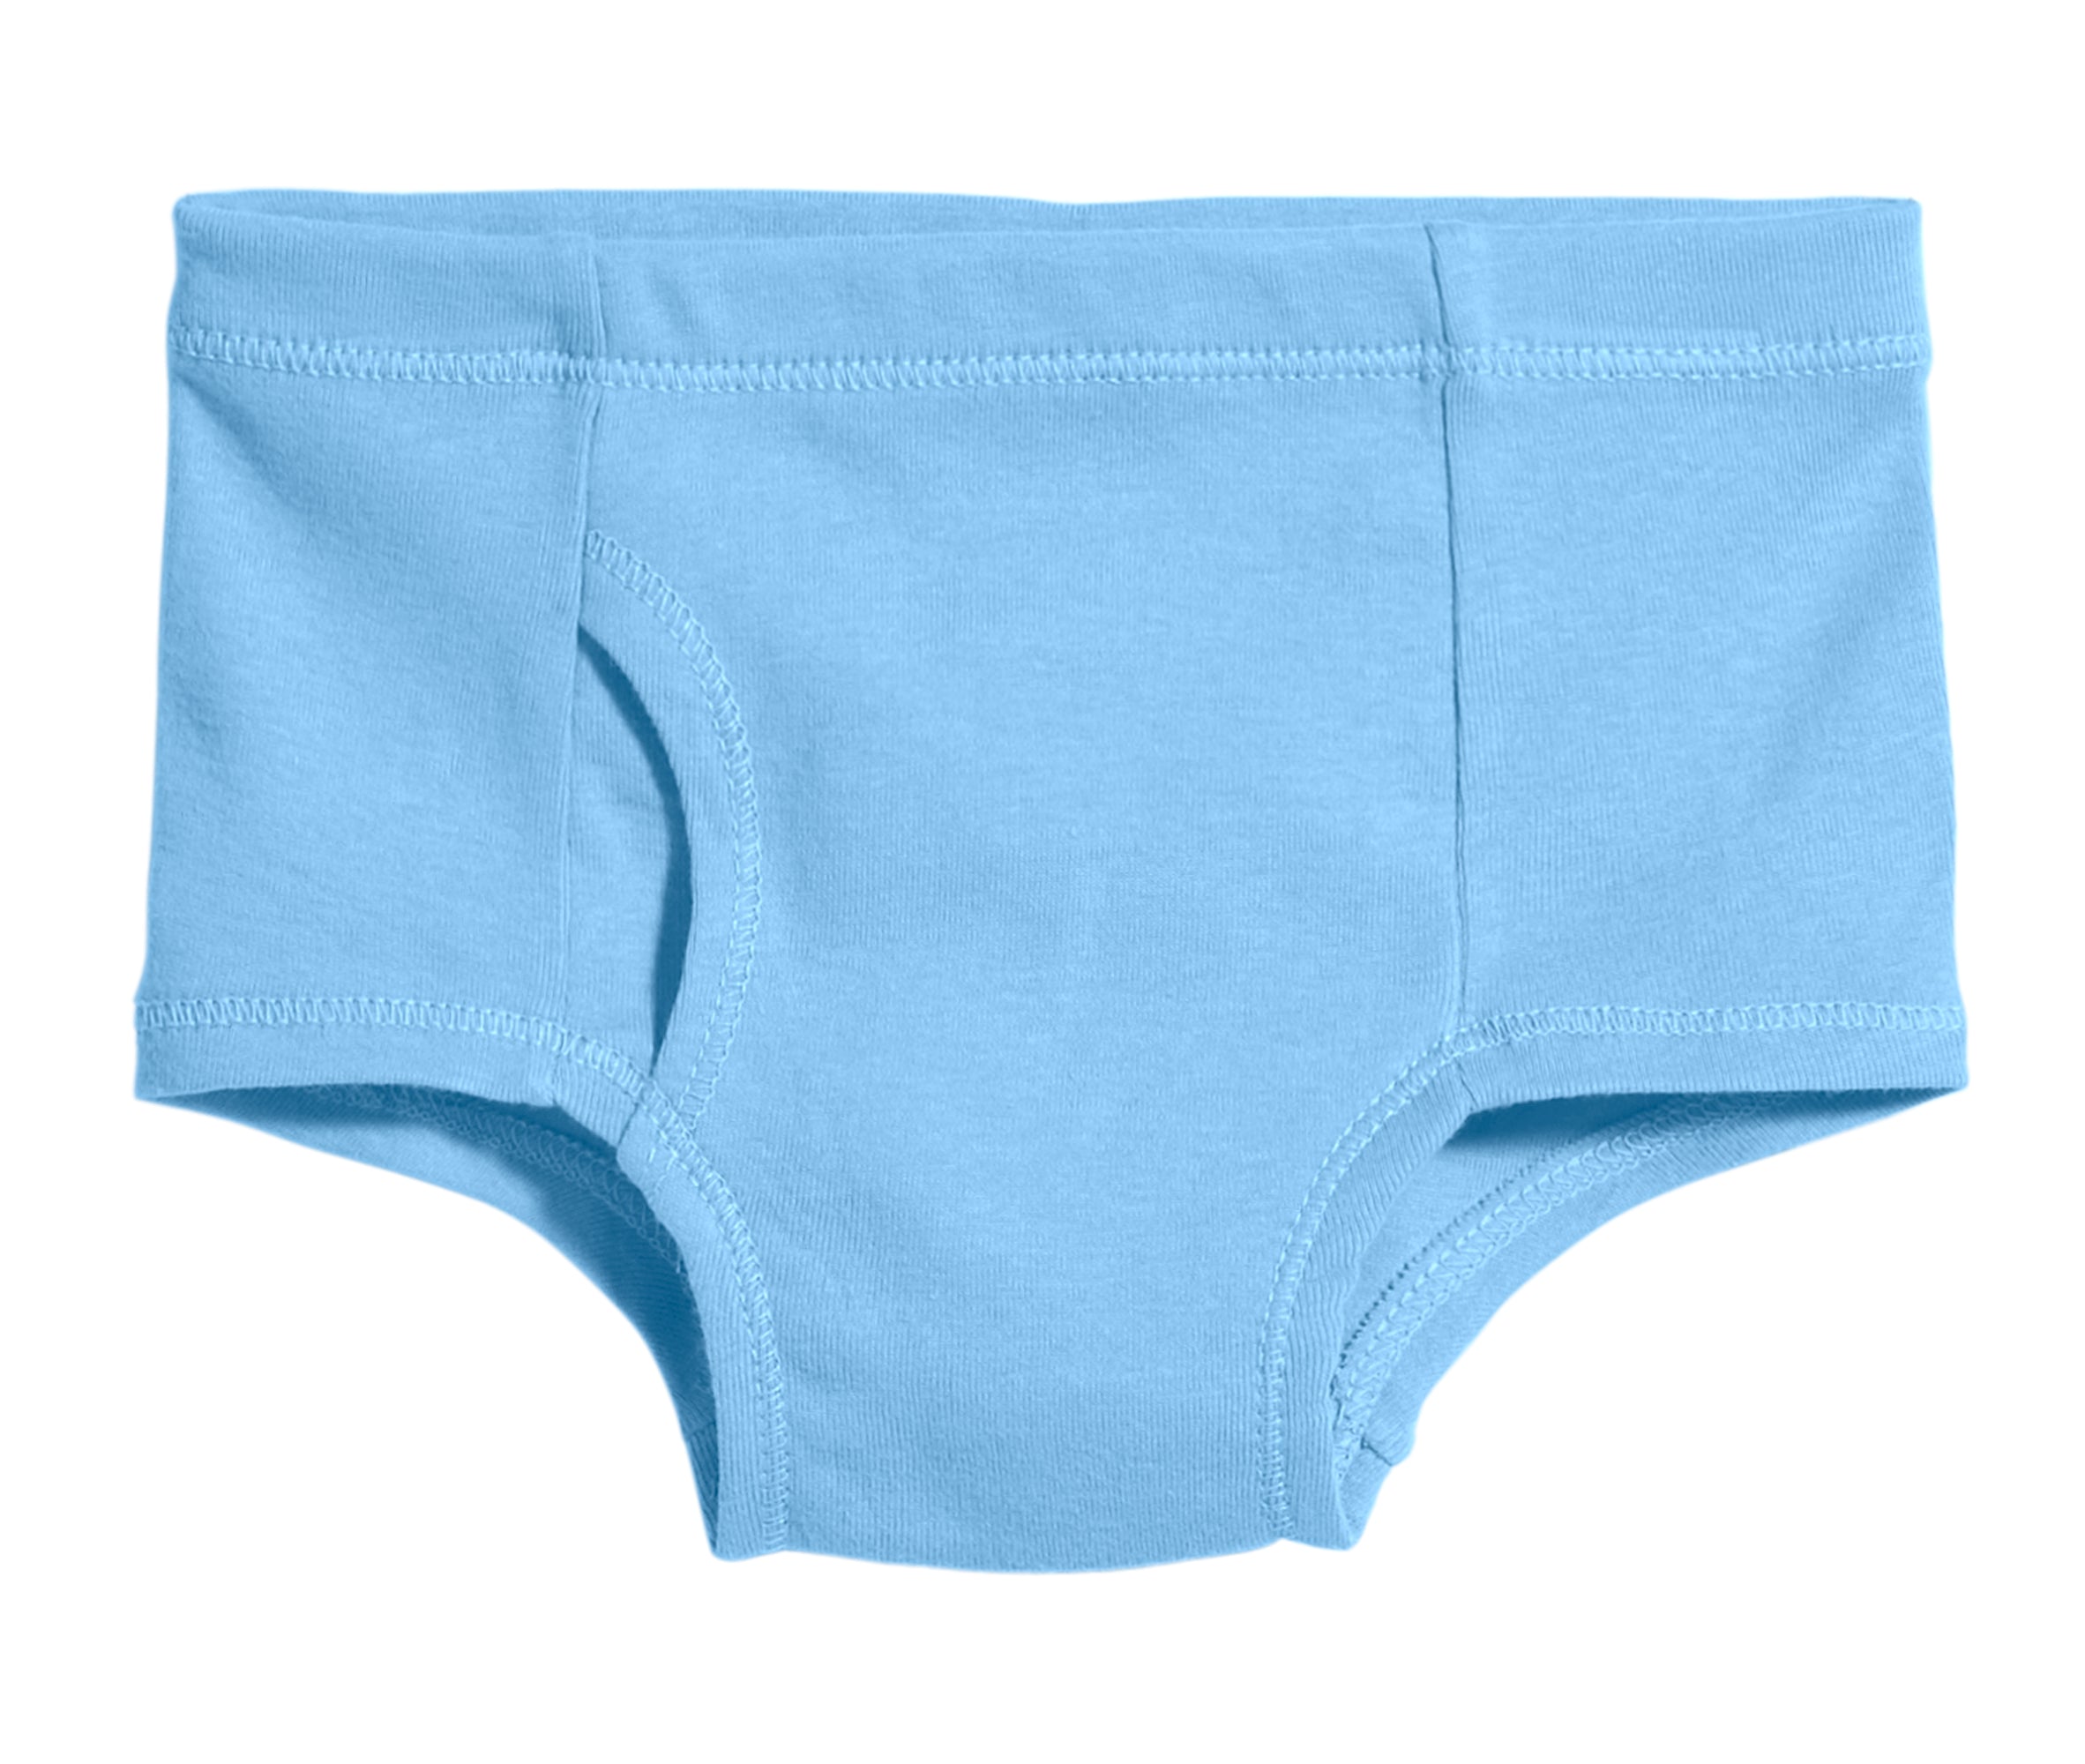 DORIDORI - Boys' Organic Cotton Underwear White Panties set - Kmall24